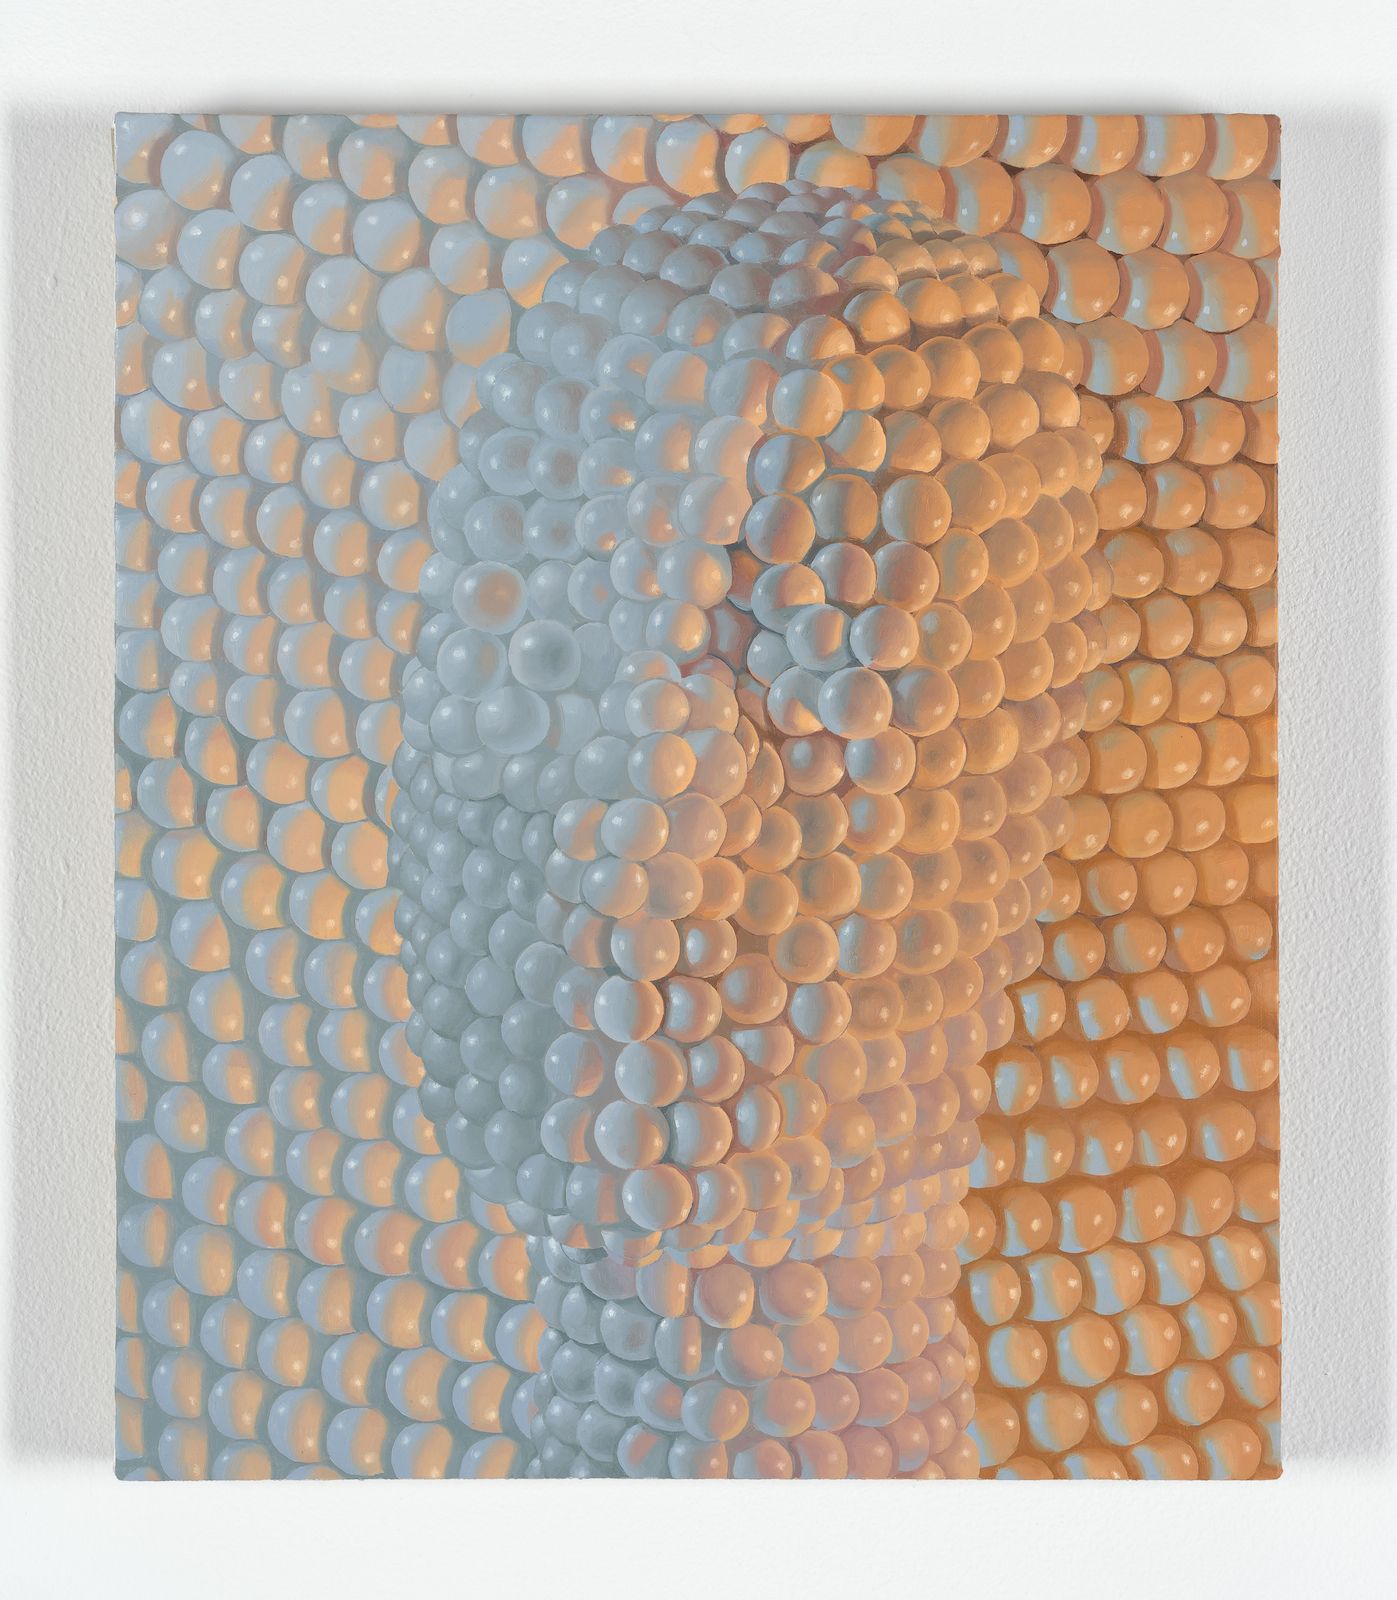 Sascha Braunig, Saccades, 2014, oil on linen over panel, 17 1/2 x 15 in